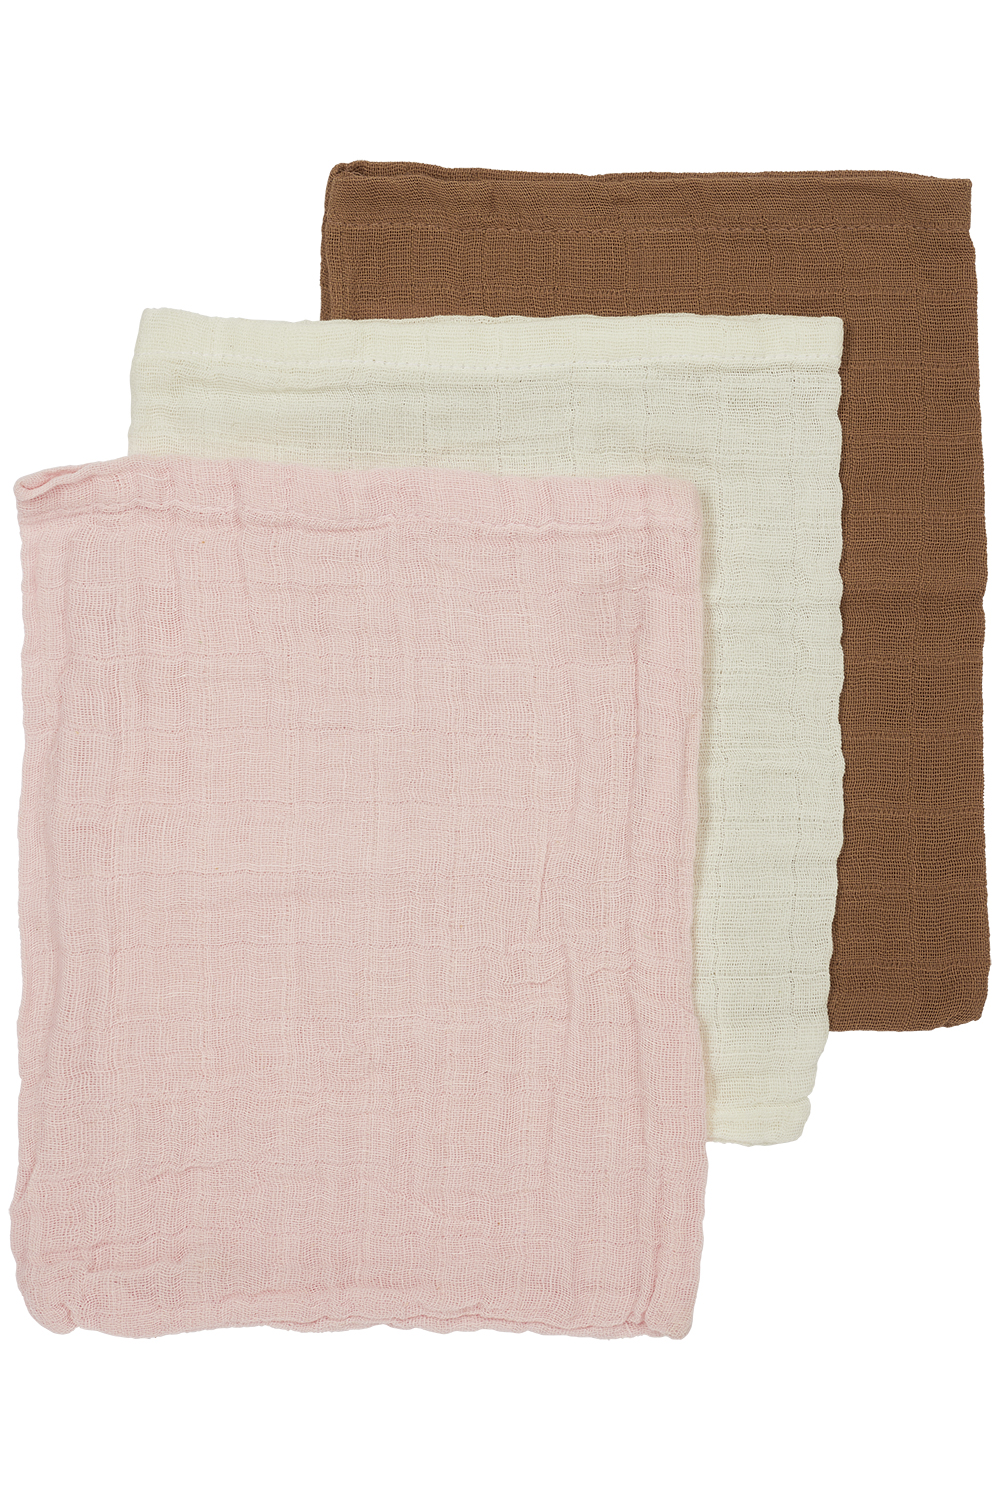 Washcloth 3-pack muslin Uni - offwhite/soft pink/toffee - 20x17cm